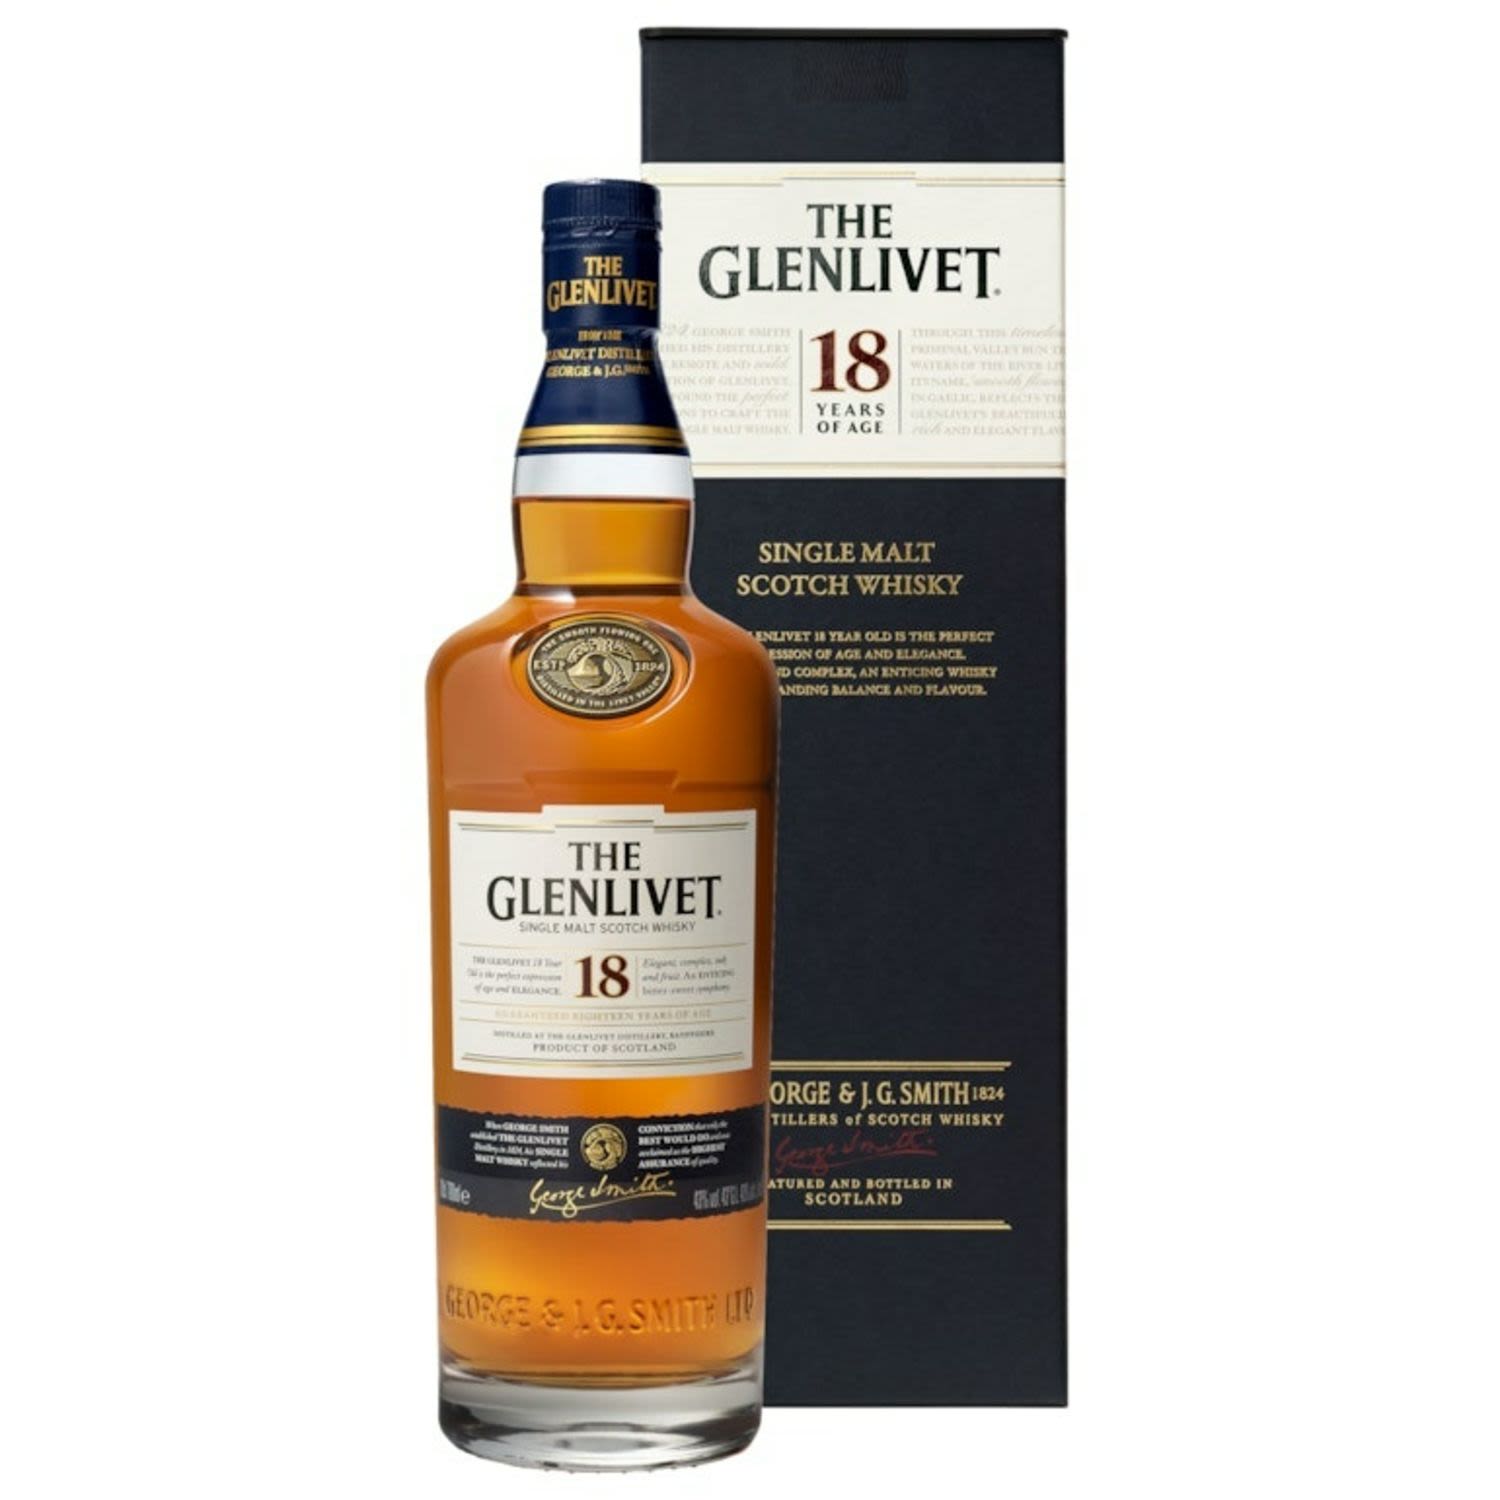 The Glenlivet 18 Year Old Scotch Whisky 700mL Bottle